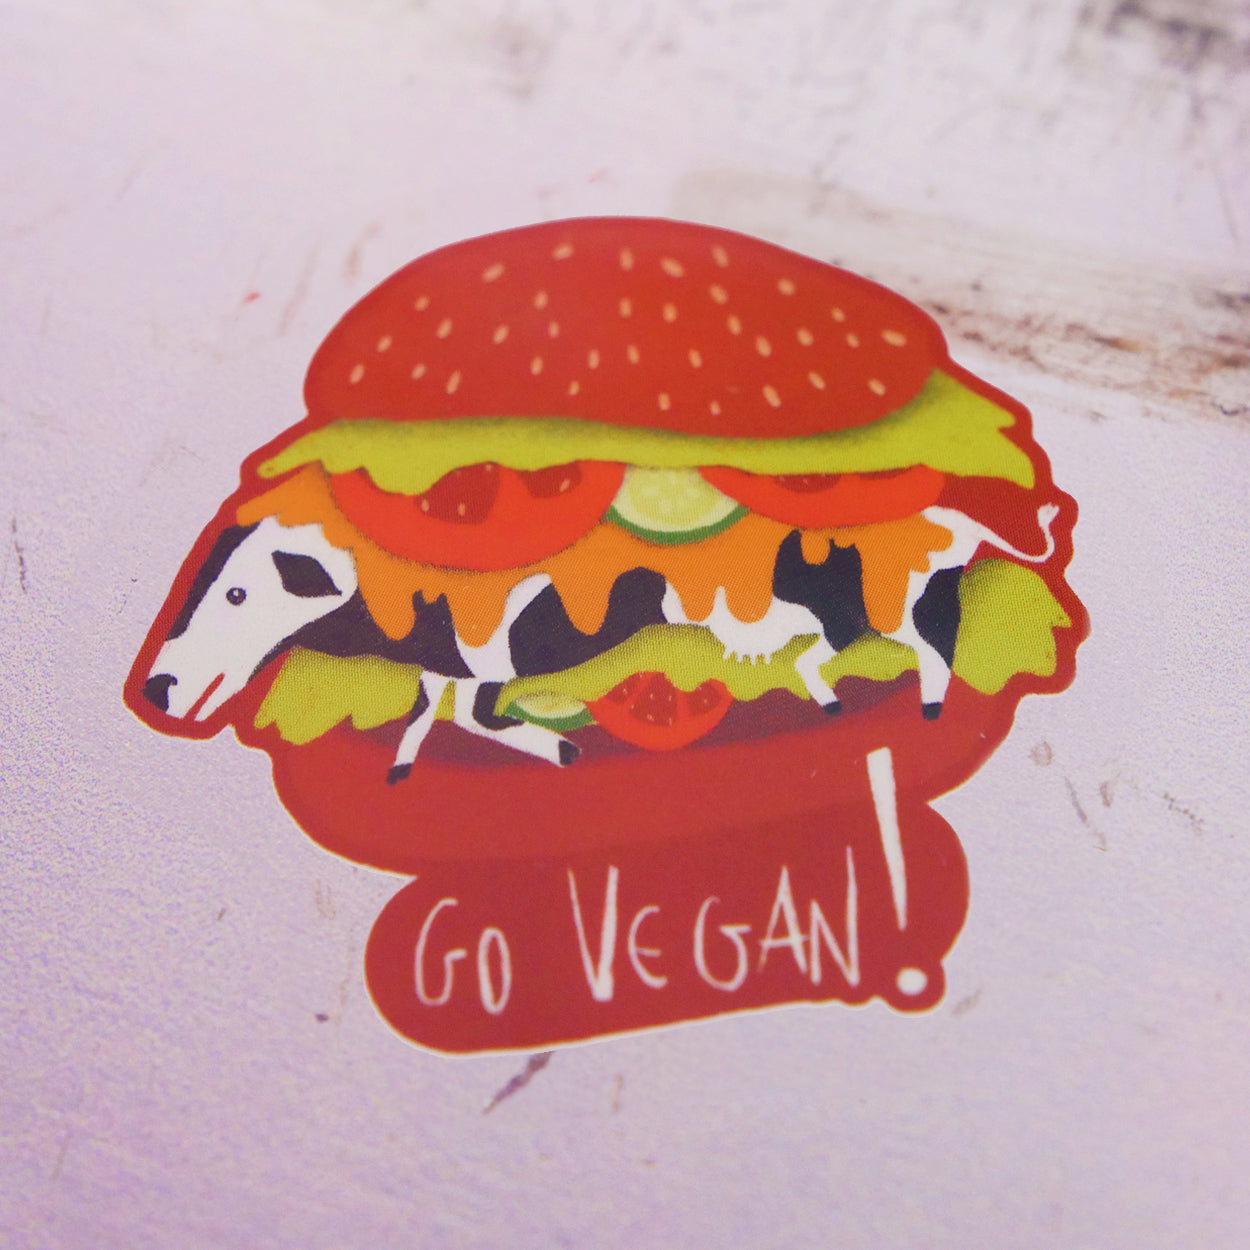 Go vegan!